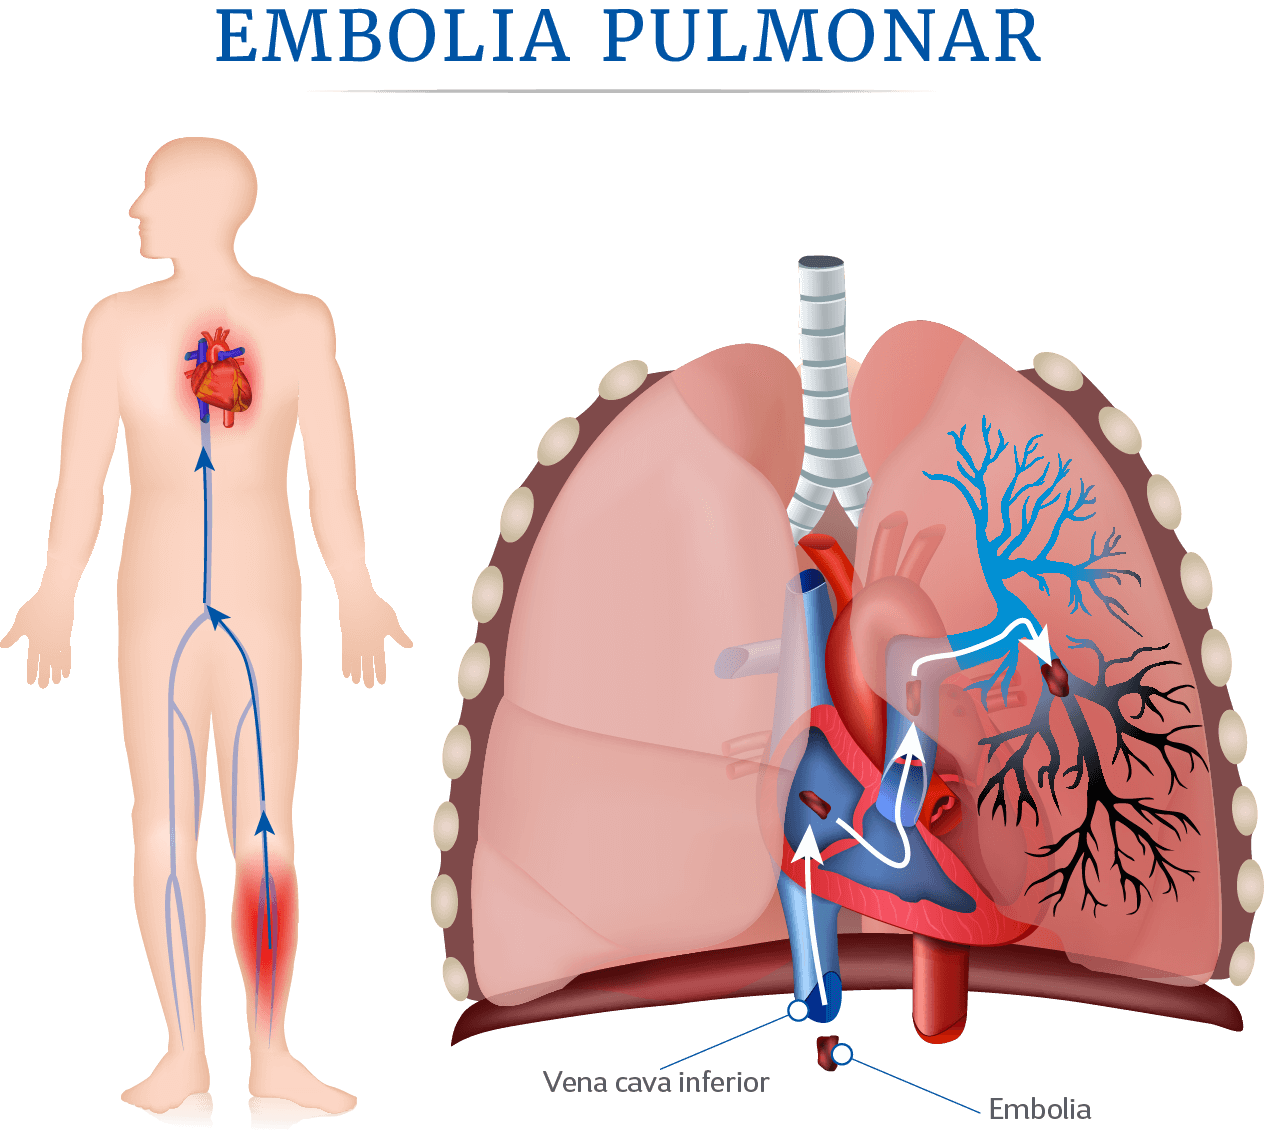 Trombosis y tromboembolia pulmonar